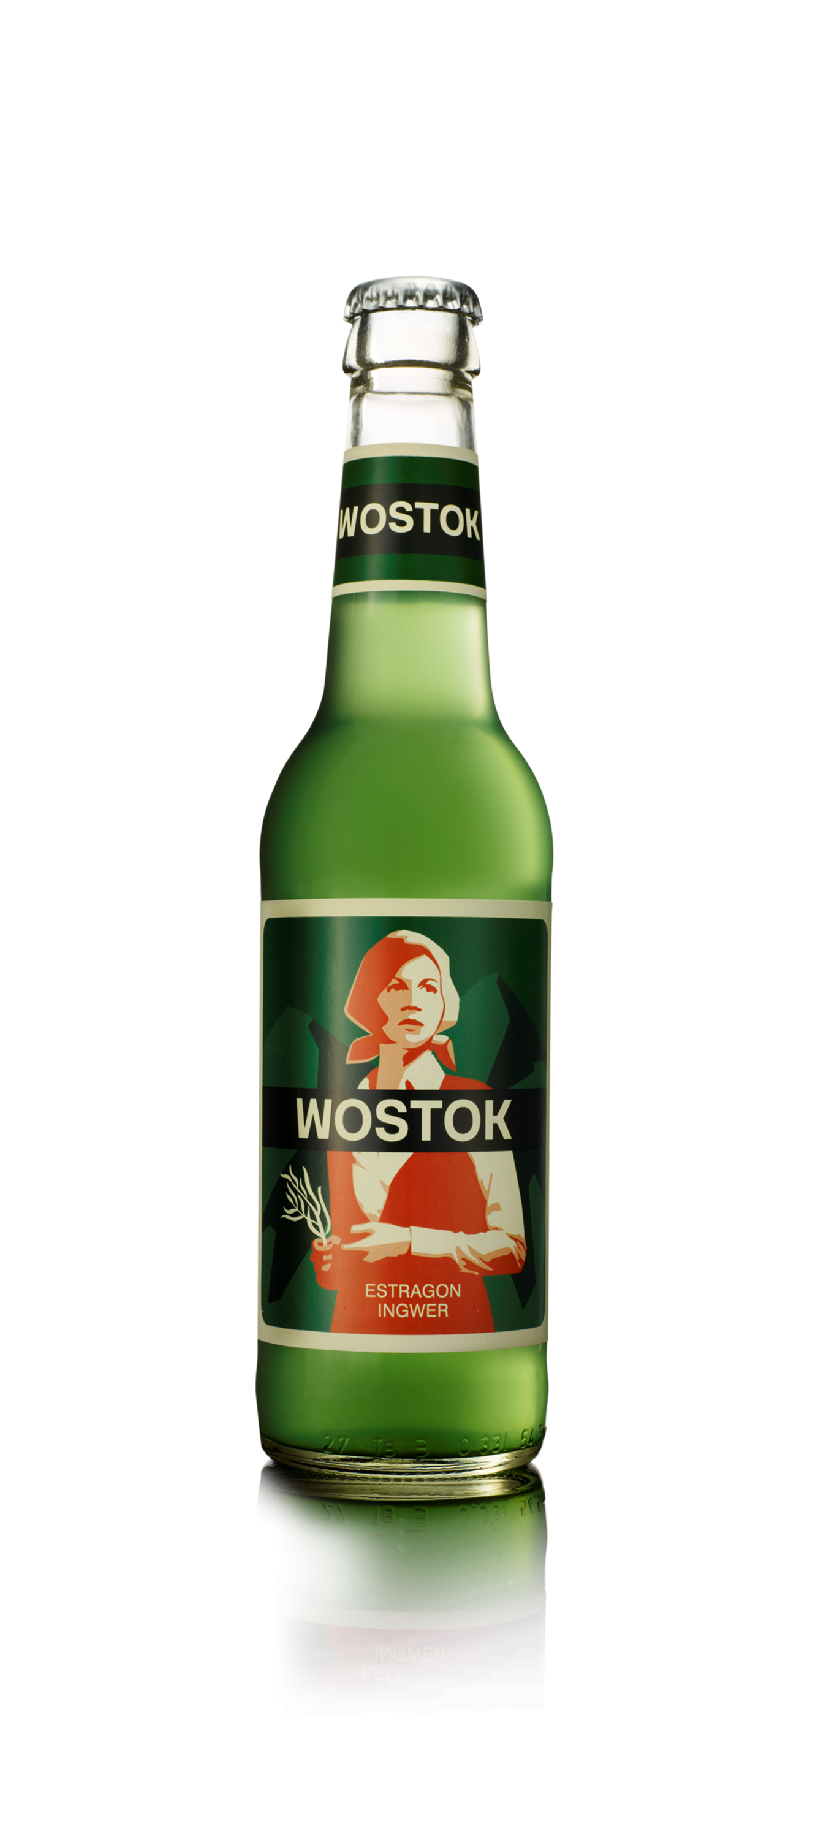 Wostok Estragon-Ingwer